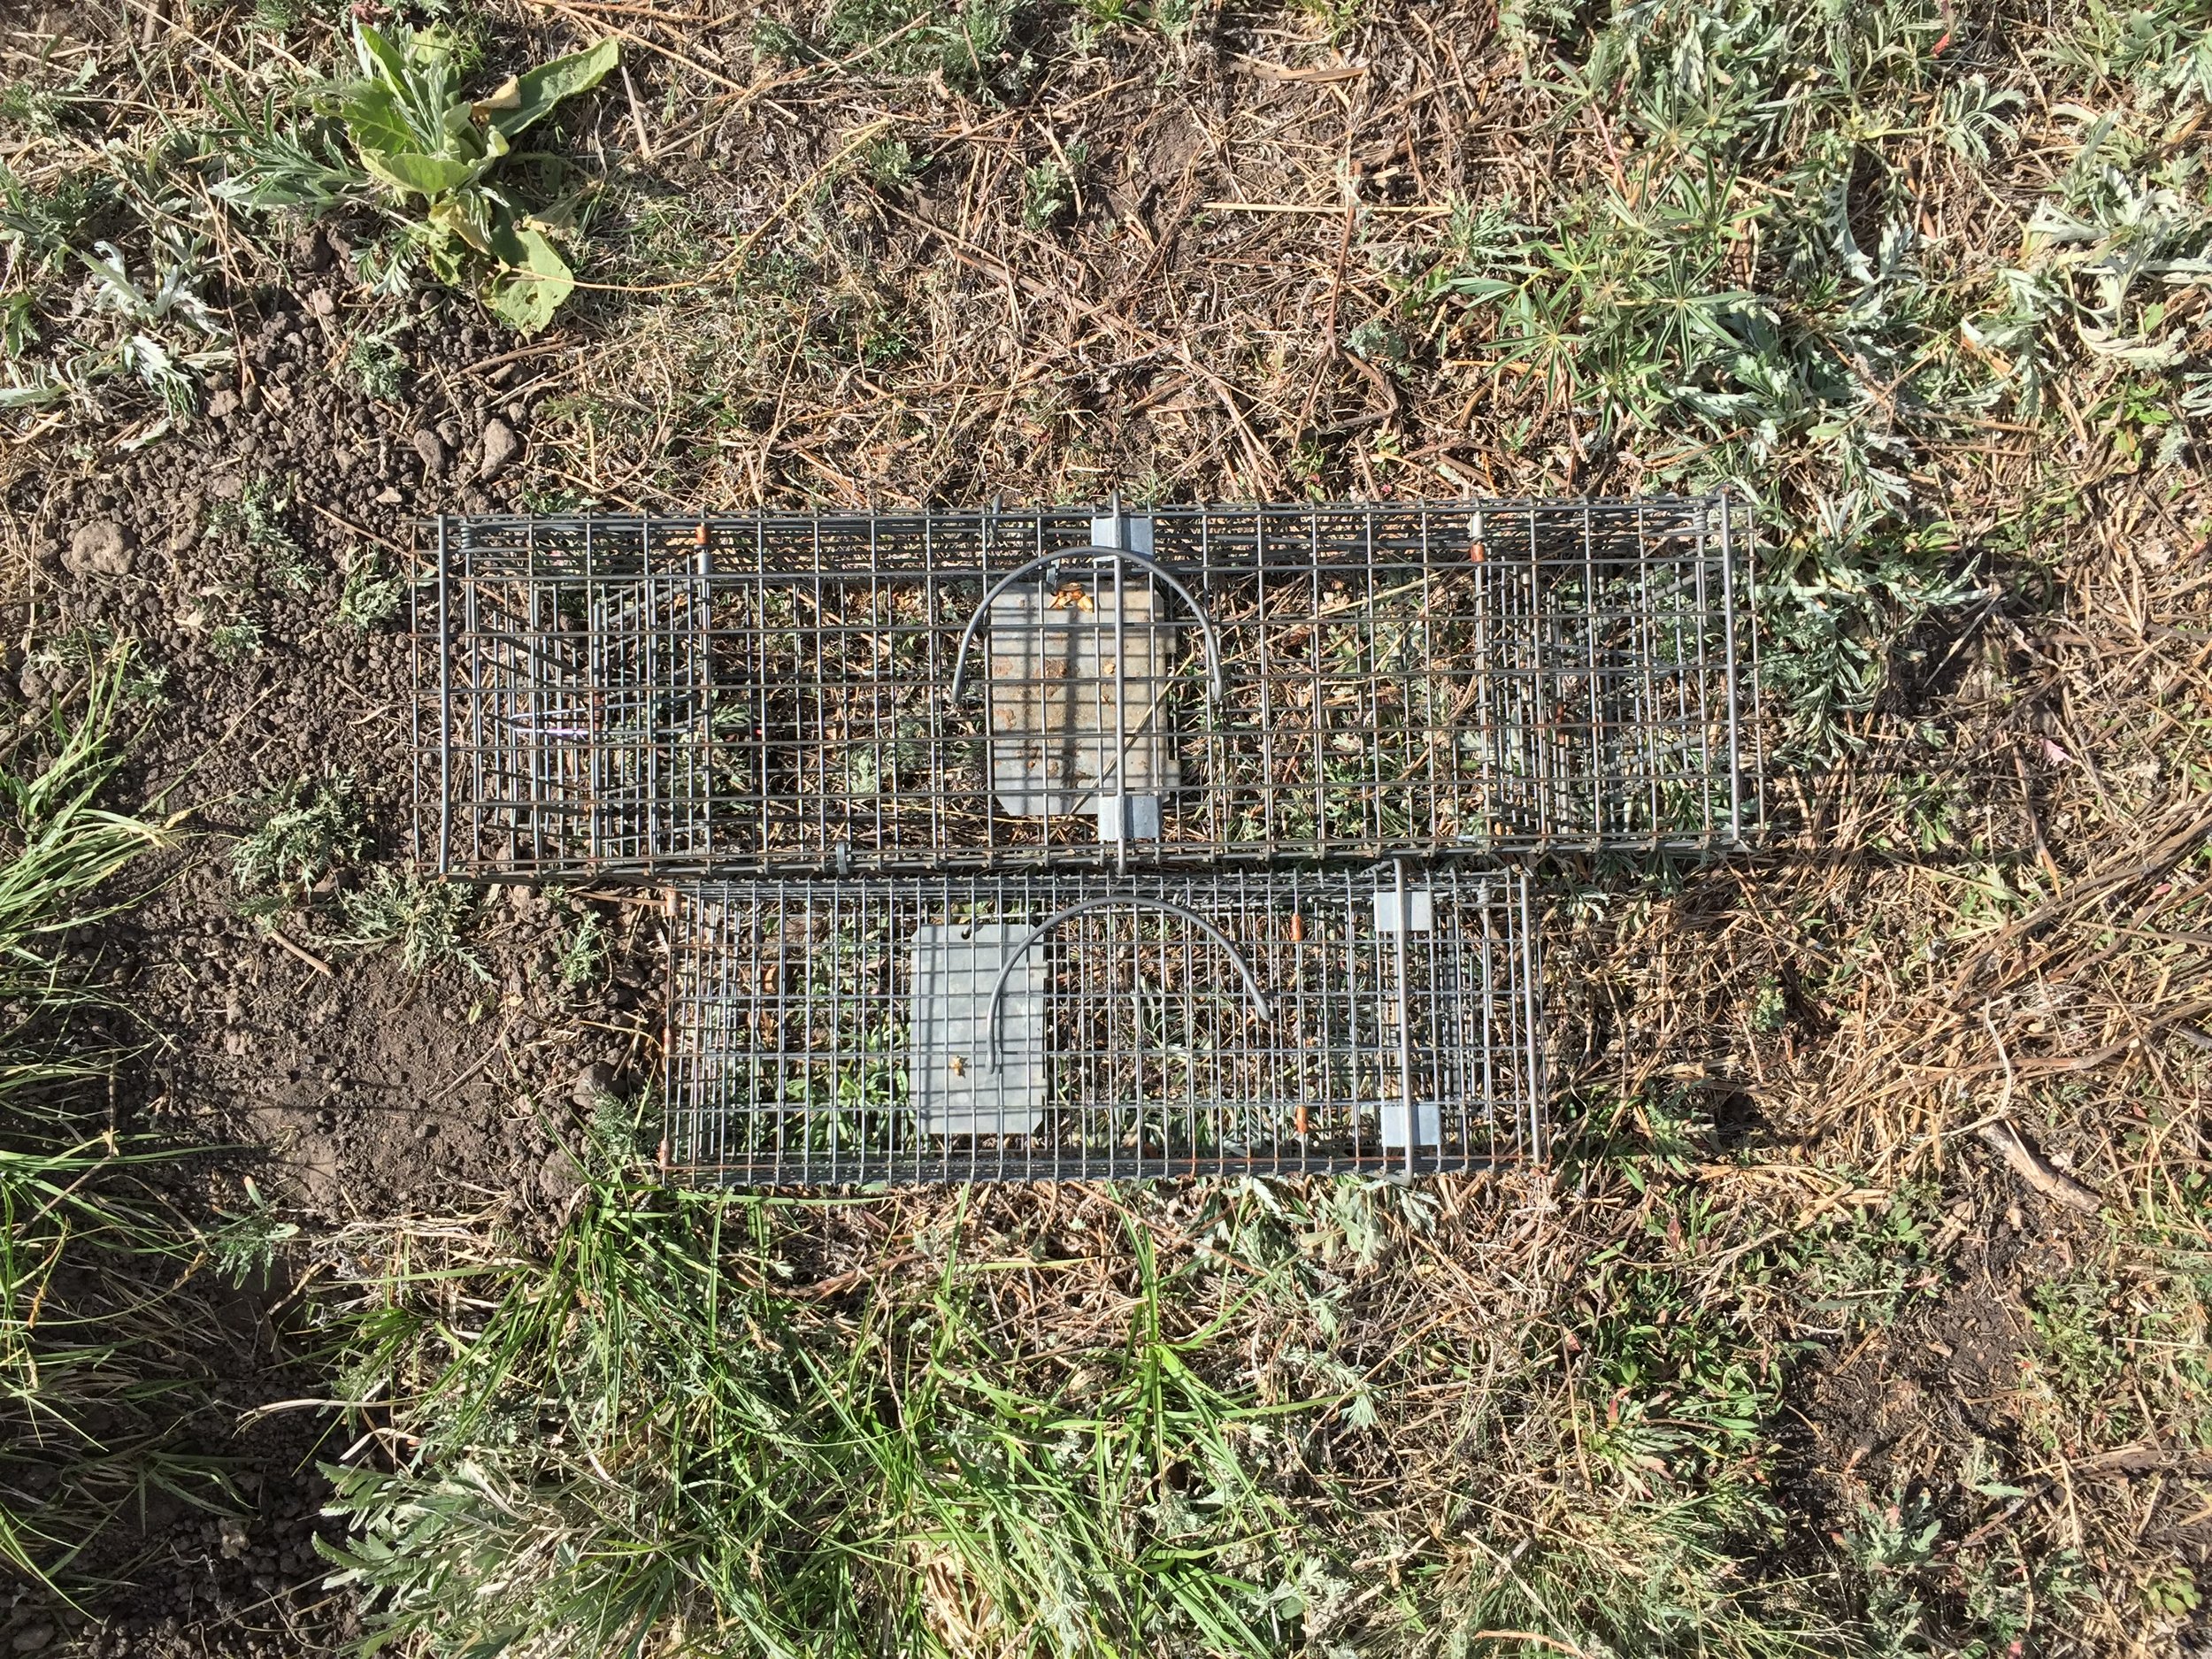  A double-door adult trap and a single-door juvenile trap - both Tomahawk live traps.  ©MRR 2016  